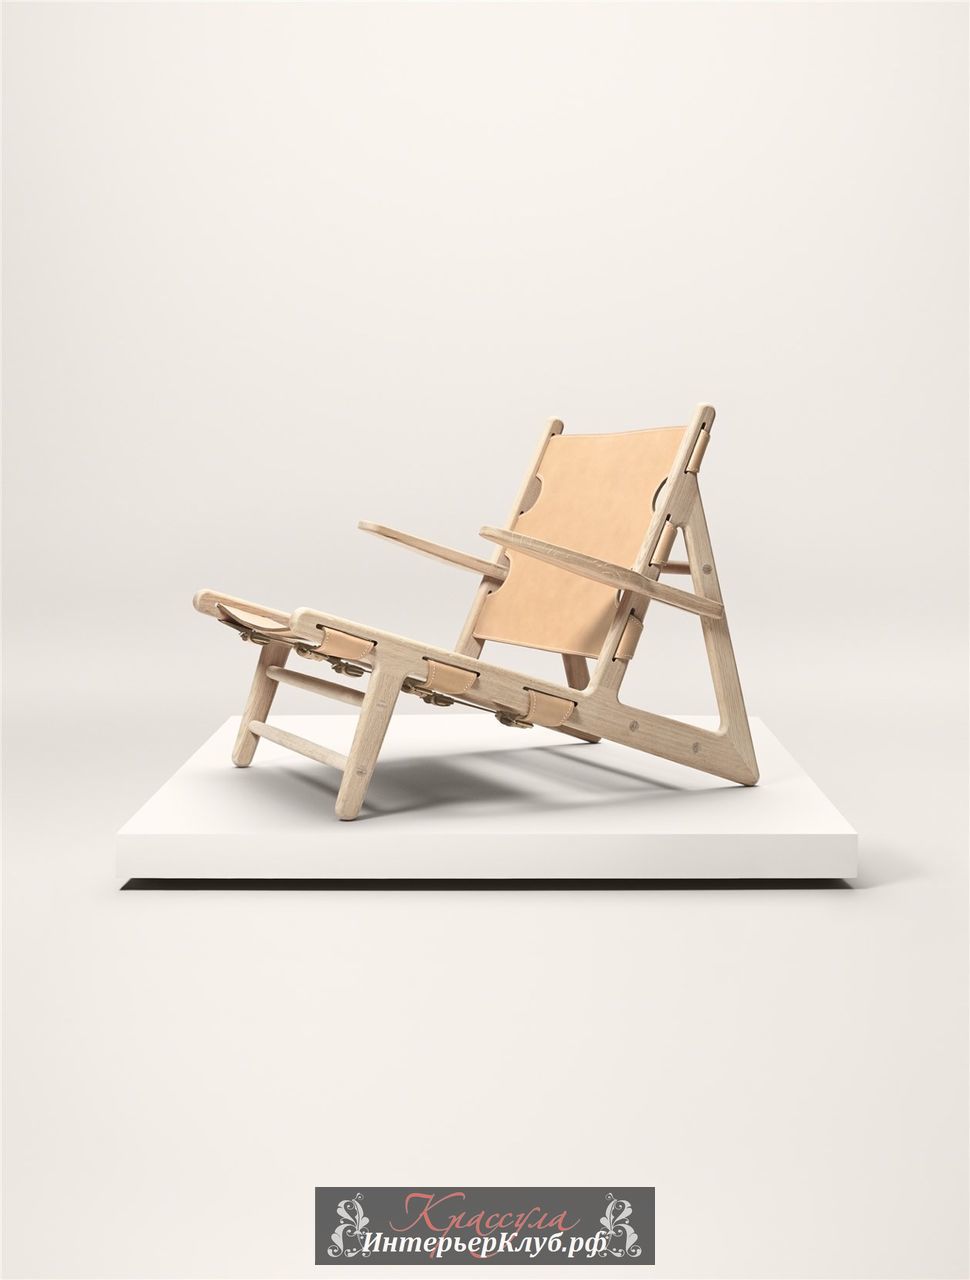 1 Охотничье кресло, The Hunting Chair, разработано дизайнером Берге Могенсен в 1950 году. The-Hunting-Chair-untreated-oak